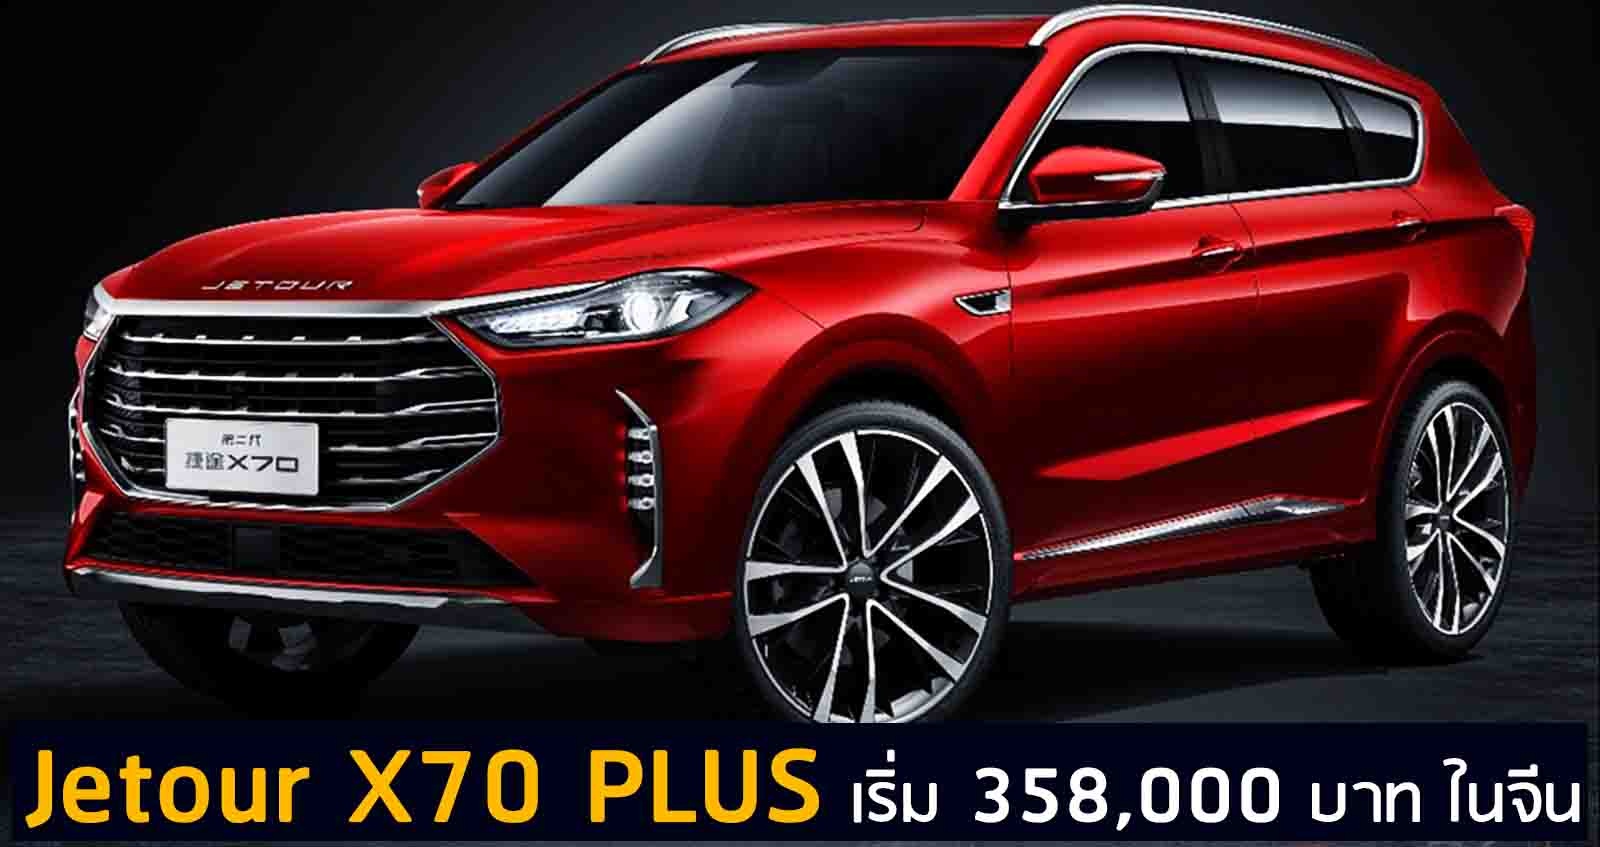 Jetour X70 PLUS ราคาเริ่ม 358,000 บาท ในจีน